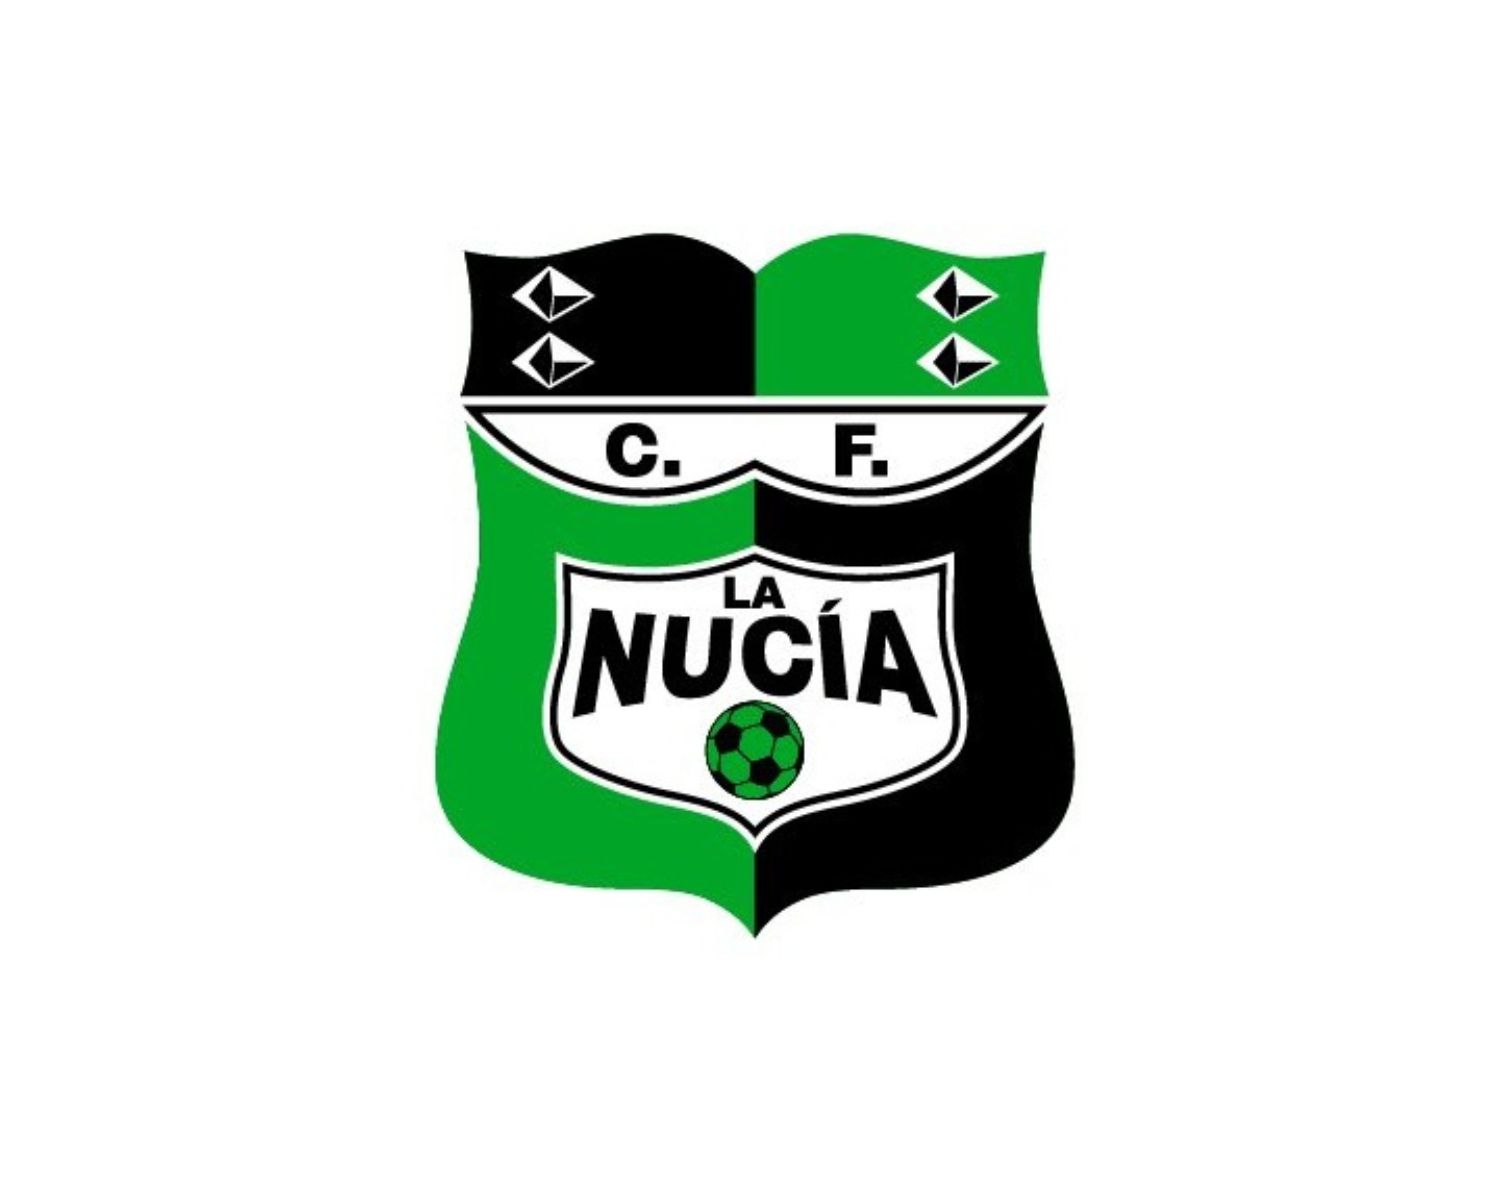 cf-la-nucia-17-football-club-facts